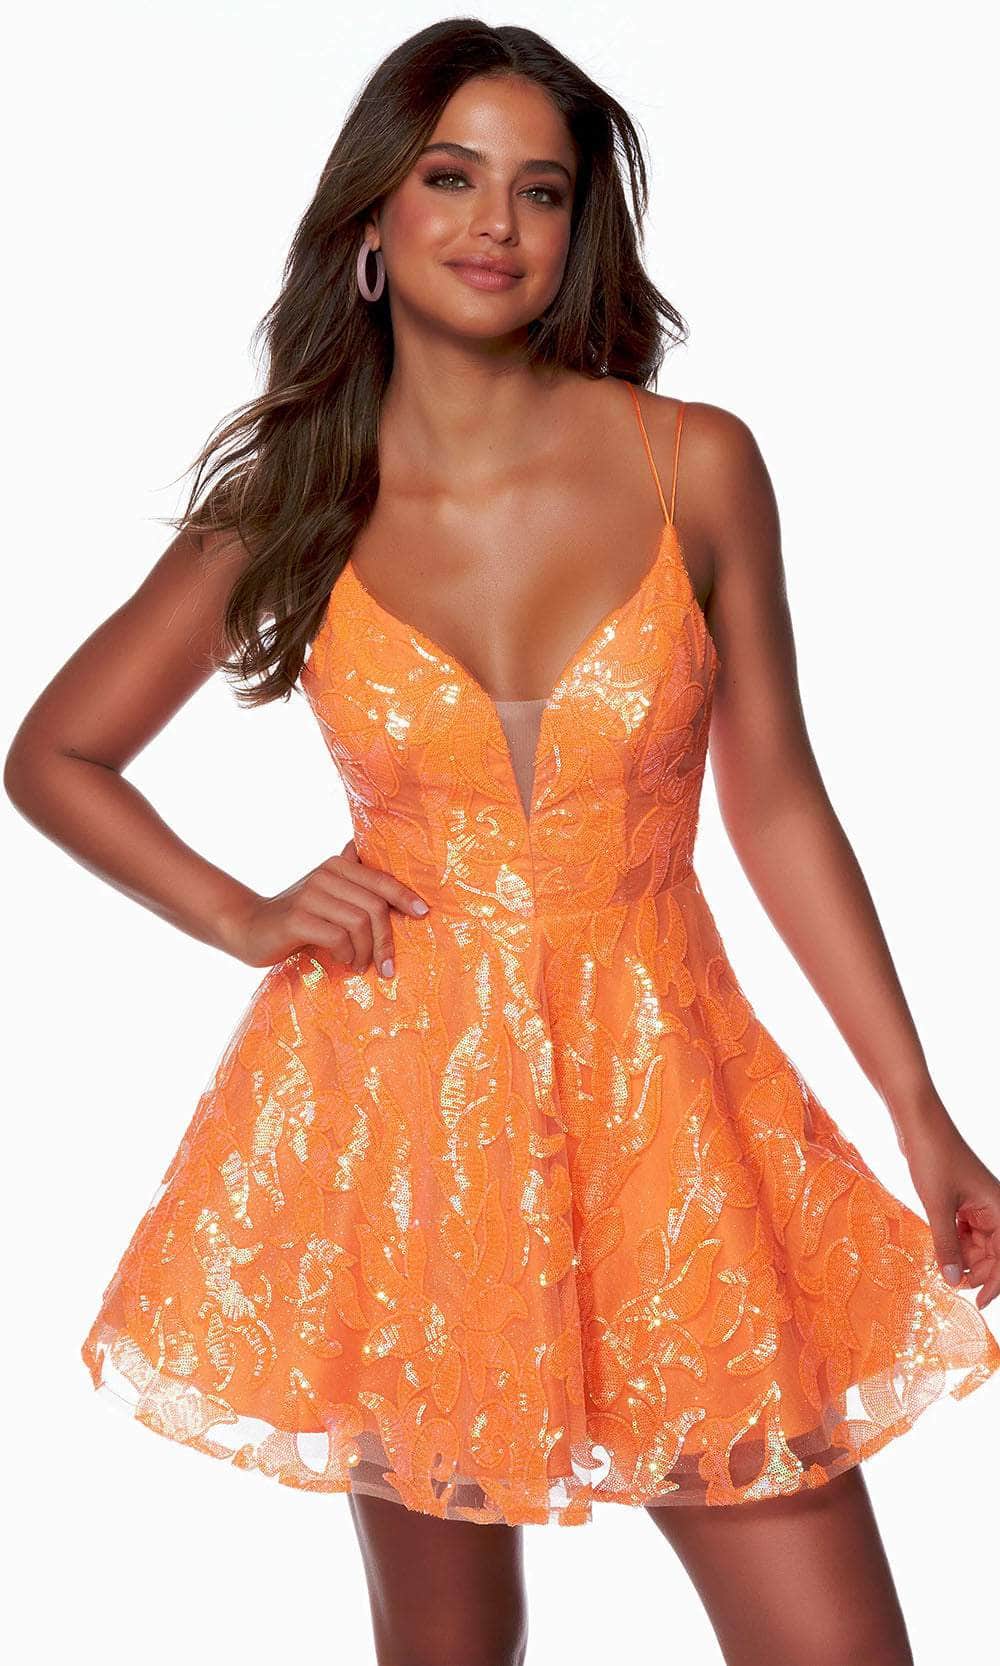 Alyce Paris 3137 - Spaghetti Strap Sequin Homecoming Dress Special Occasion Dress 000 / Neon Orange